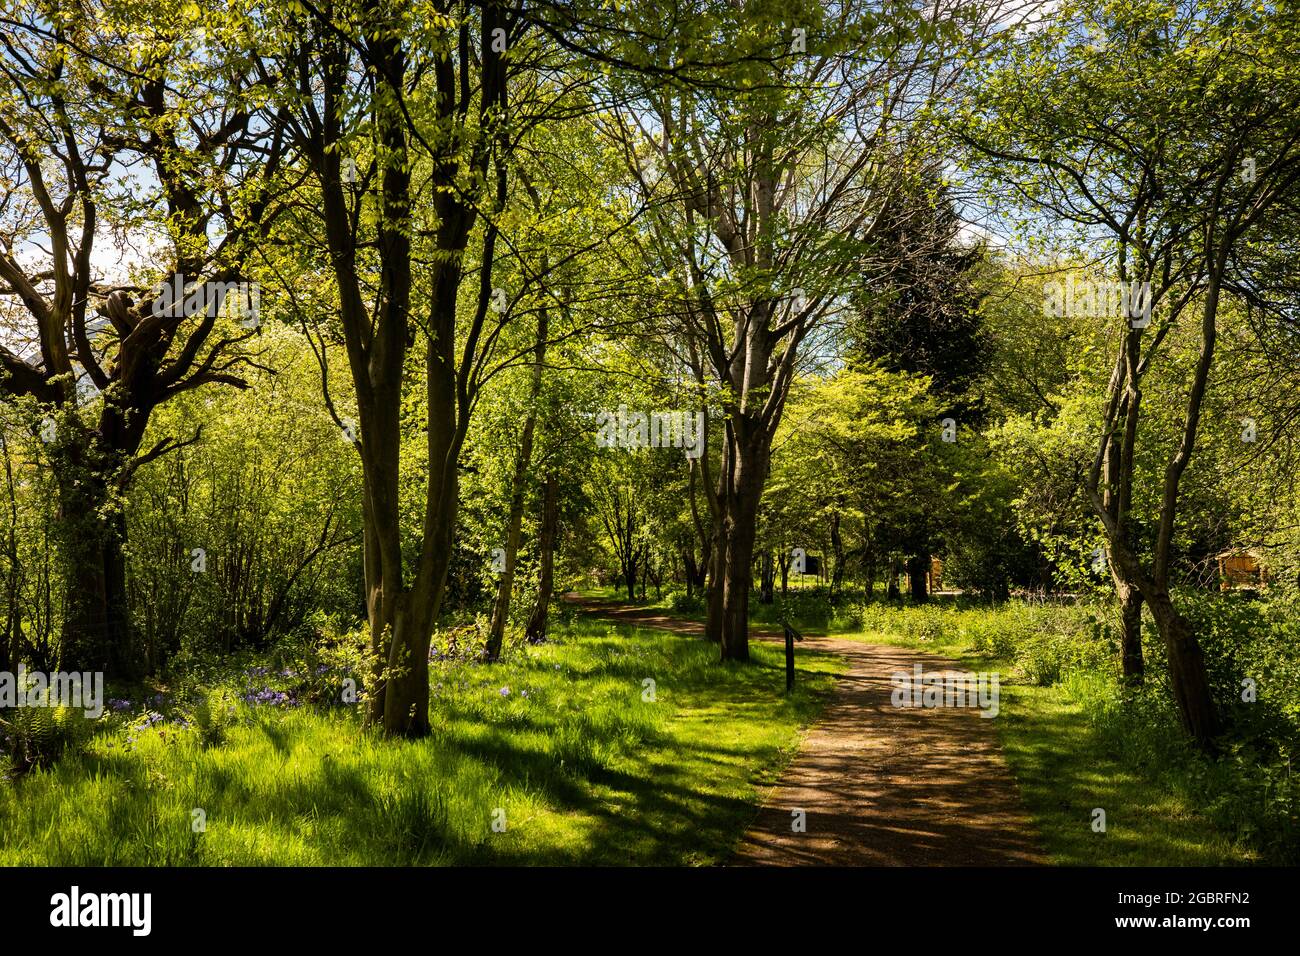 UK, England, Cheshire, Goostrey, University of Manchester, Jodrell Bank, path through woodland Stock Photo